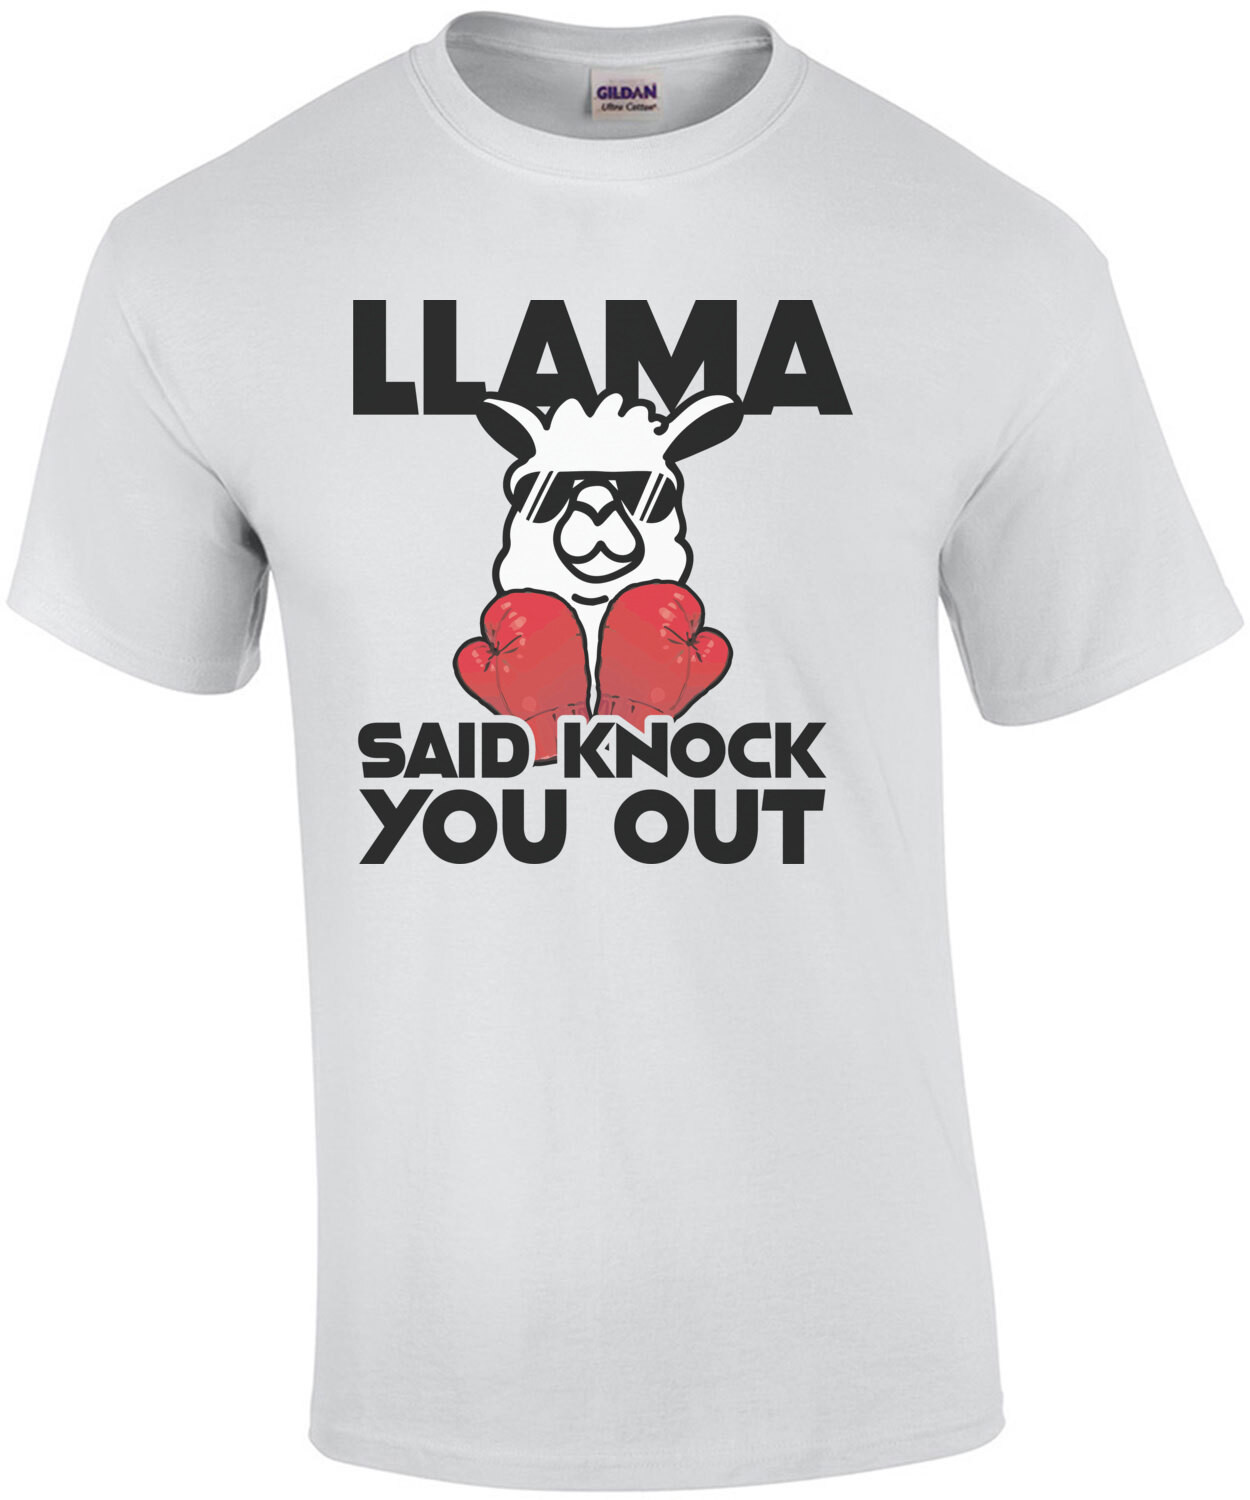 LLama said knock you out - LL Cool J 80's Parody T-Shirt